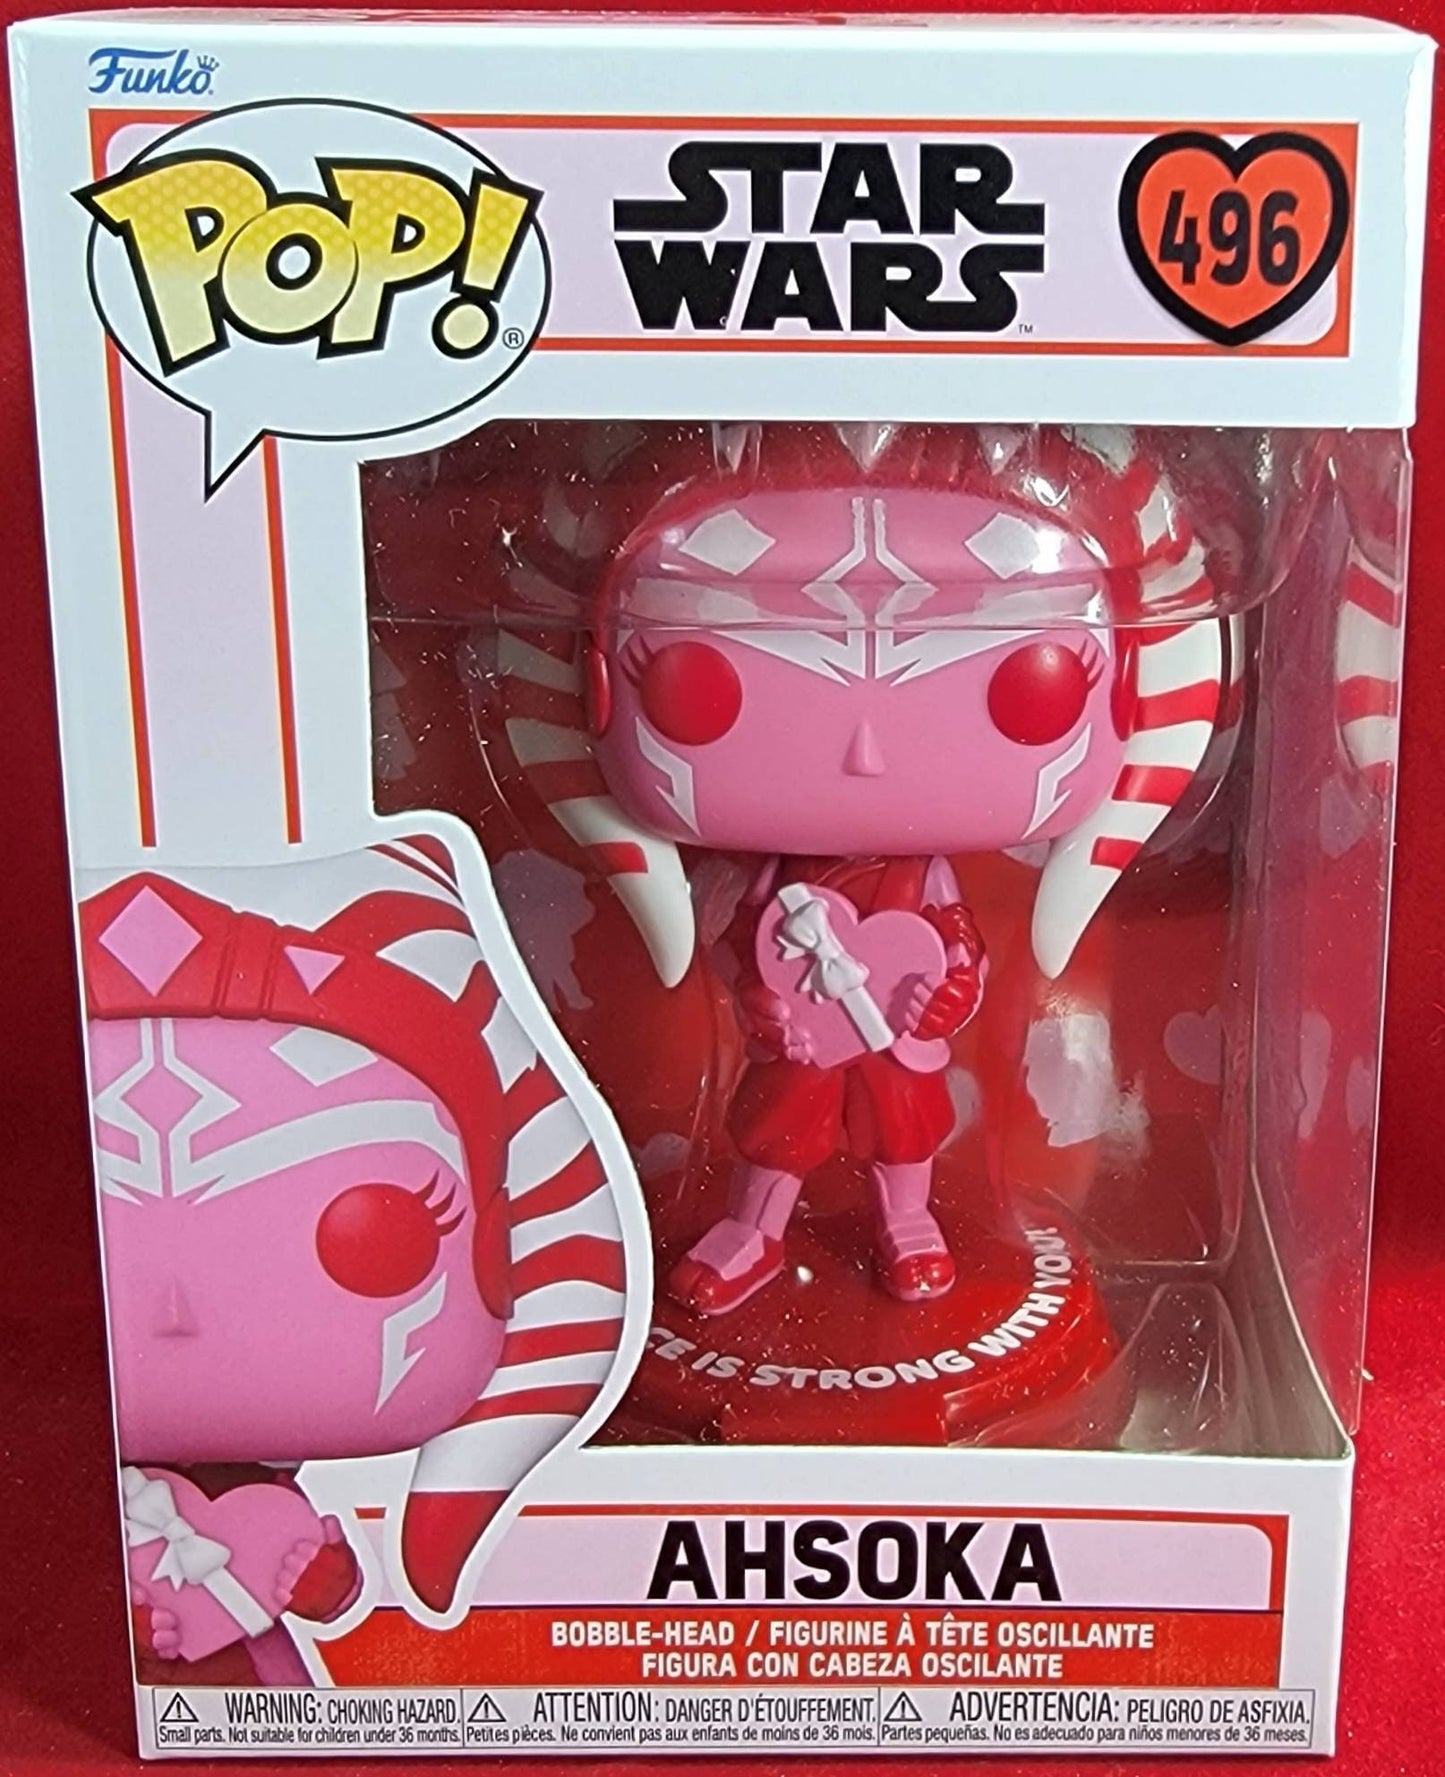 The ahsoka Mandalorian Funko # 496 Star Wars Pop